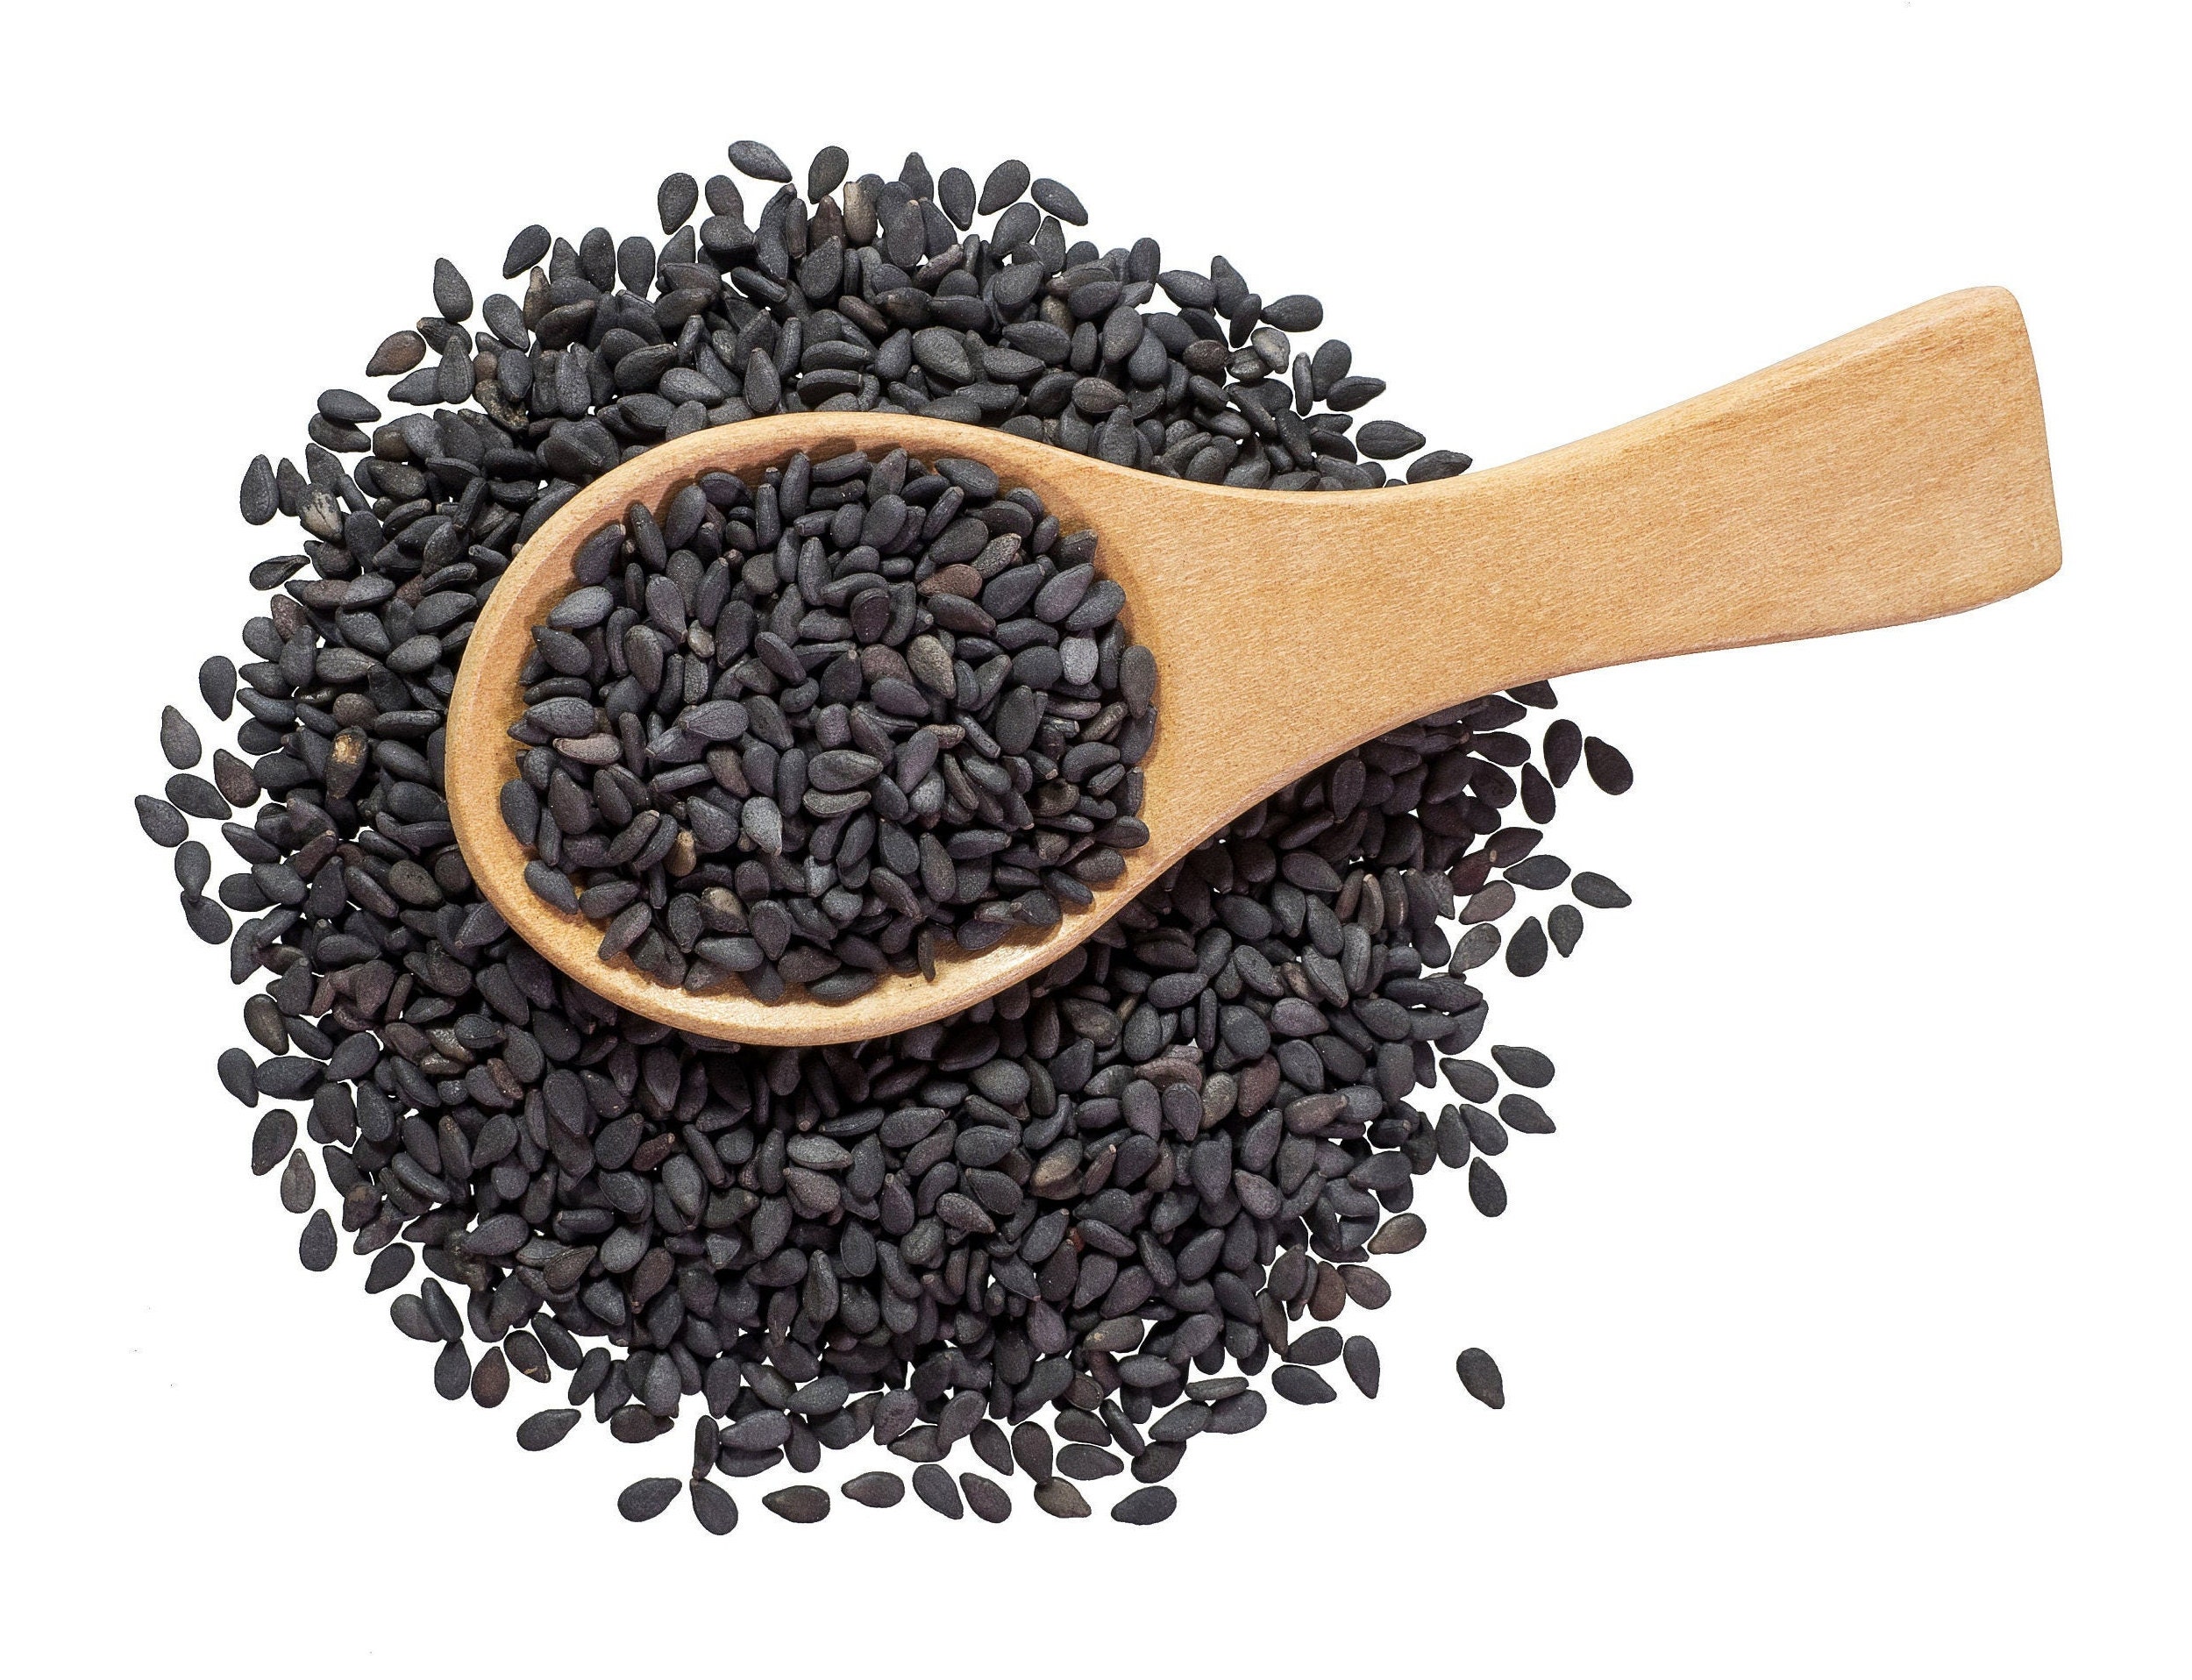 Semillas de Sésamo Negro, Black Sesame Seeds, 1 kg / 2.2 lb bag